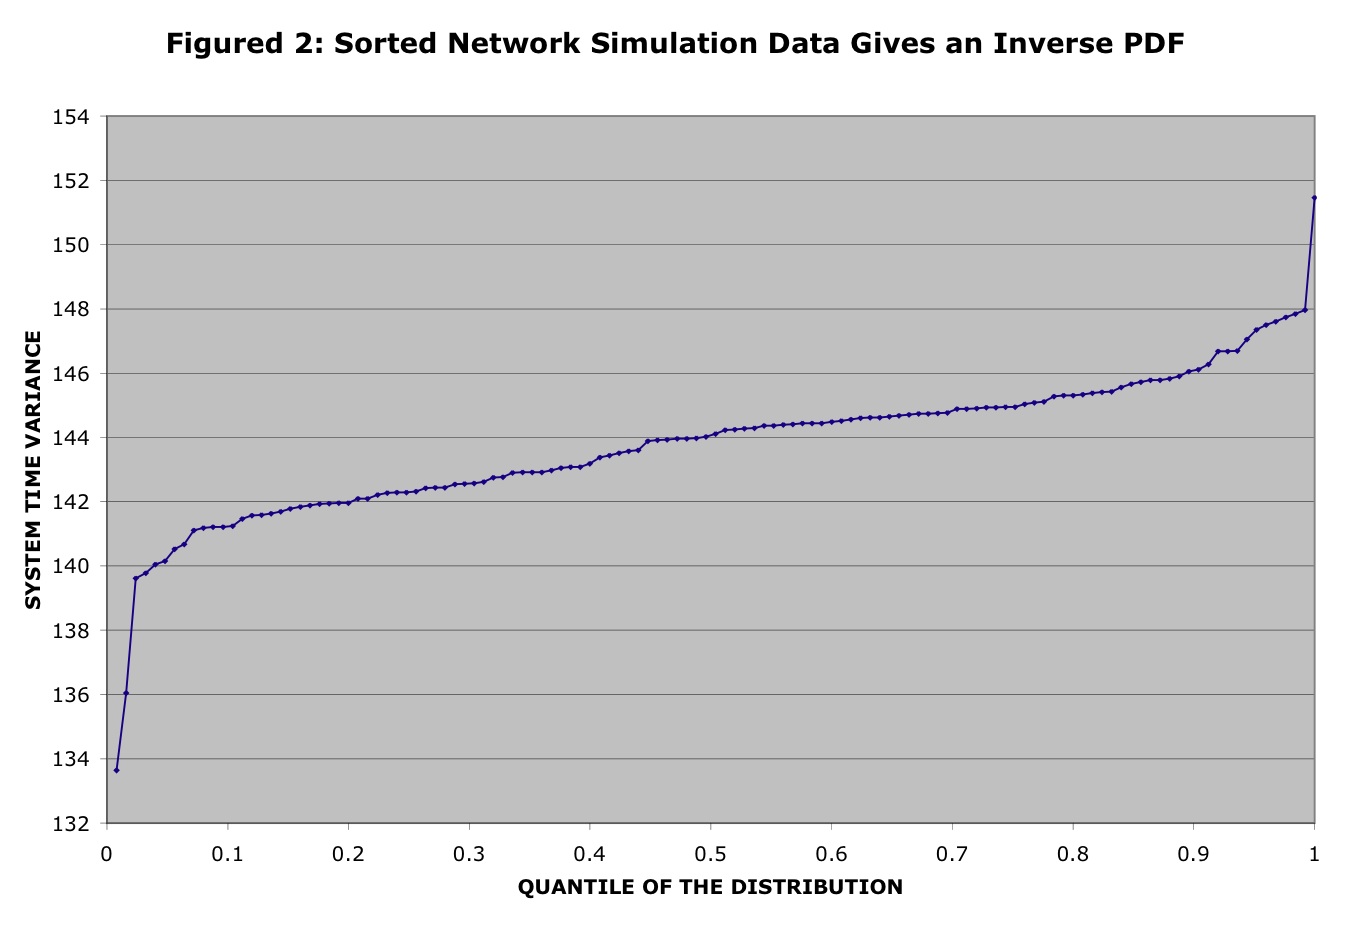 Figure 2: Data sorted into non-decreasing order